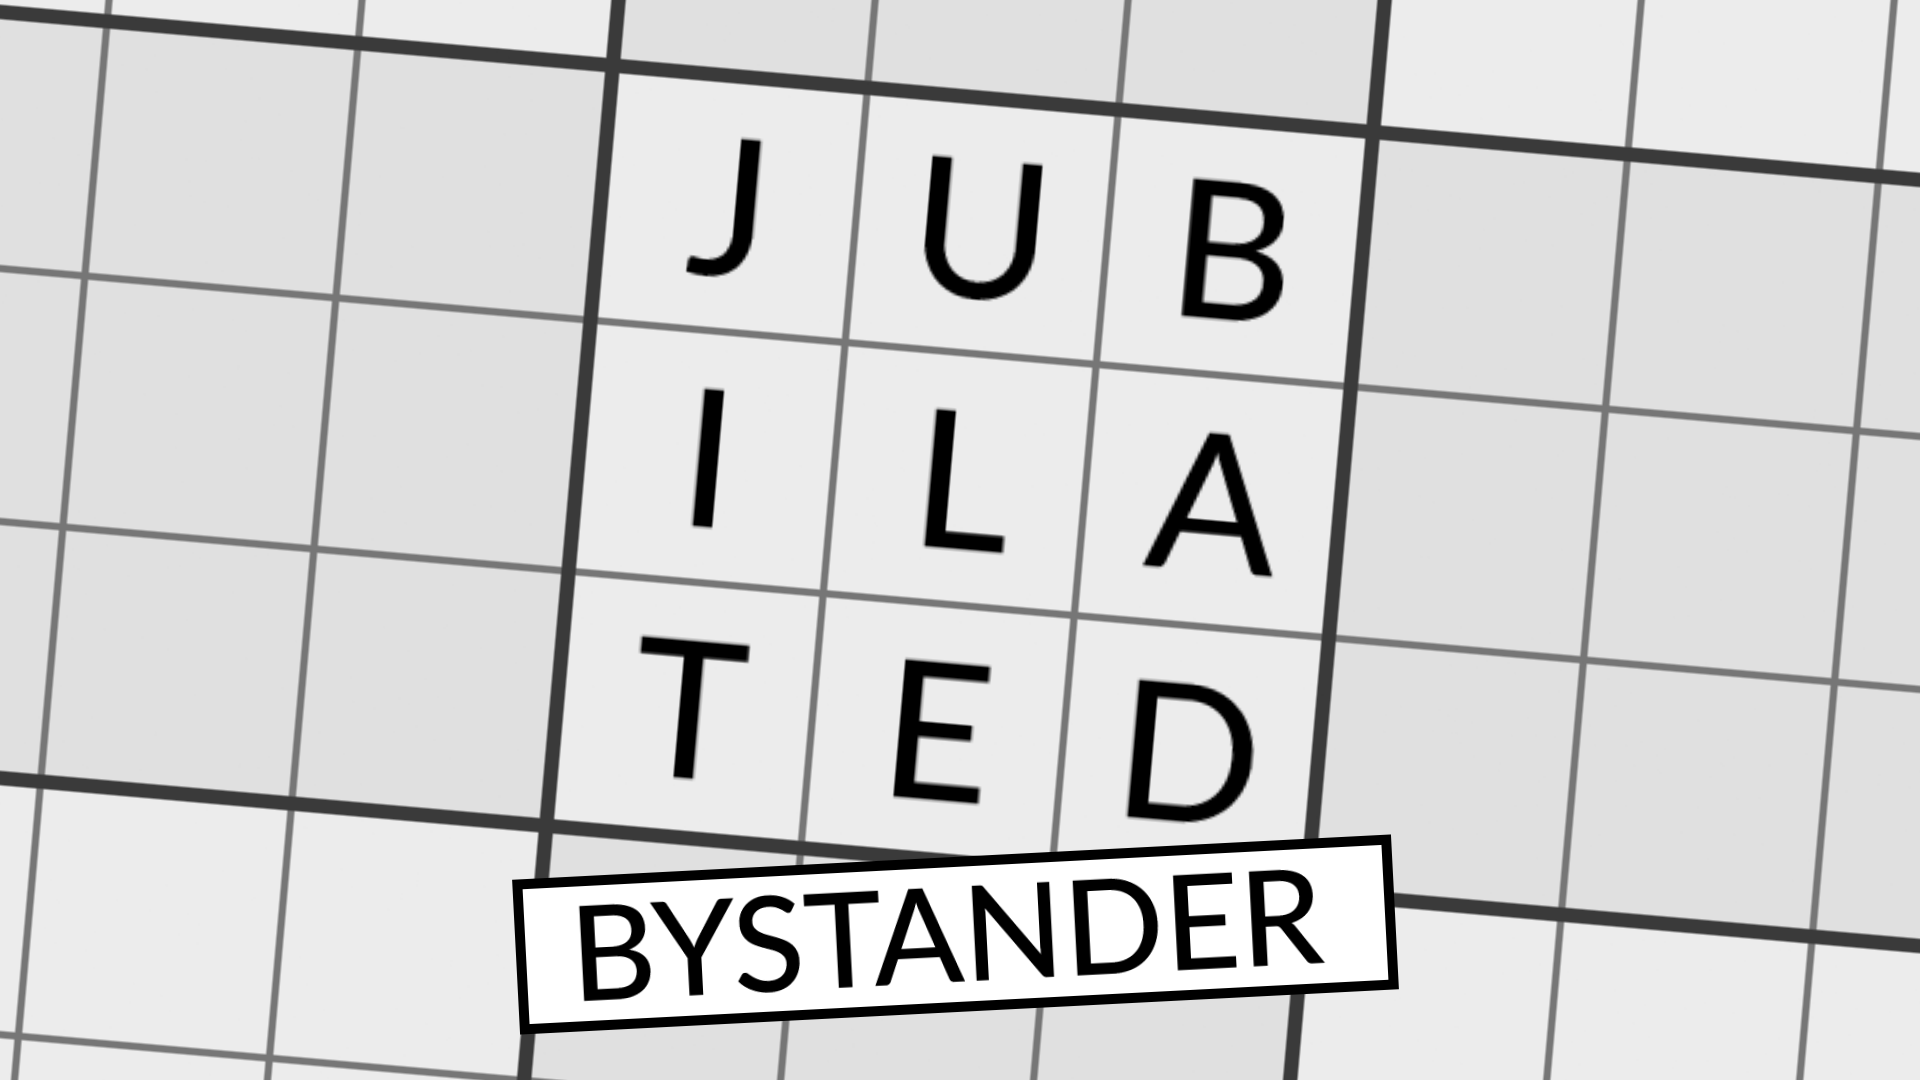 Jubilated Bystander